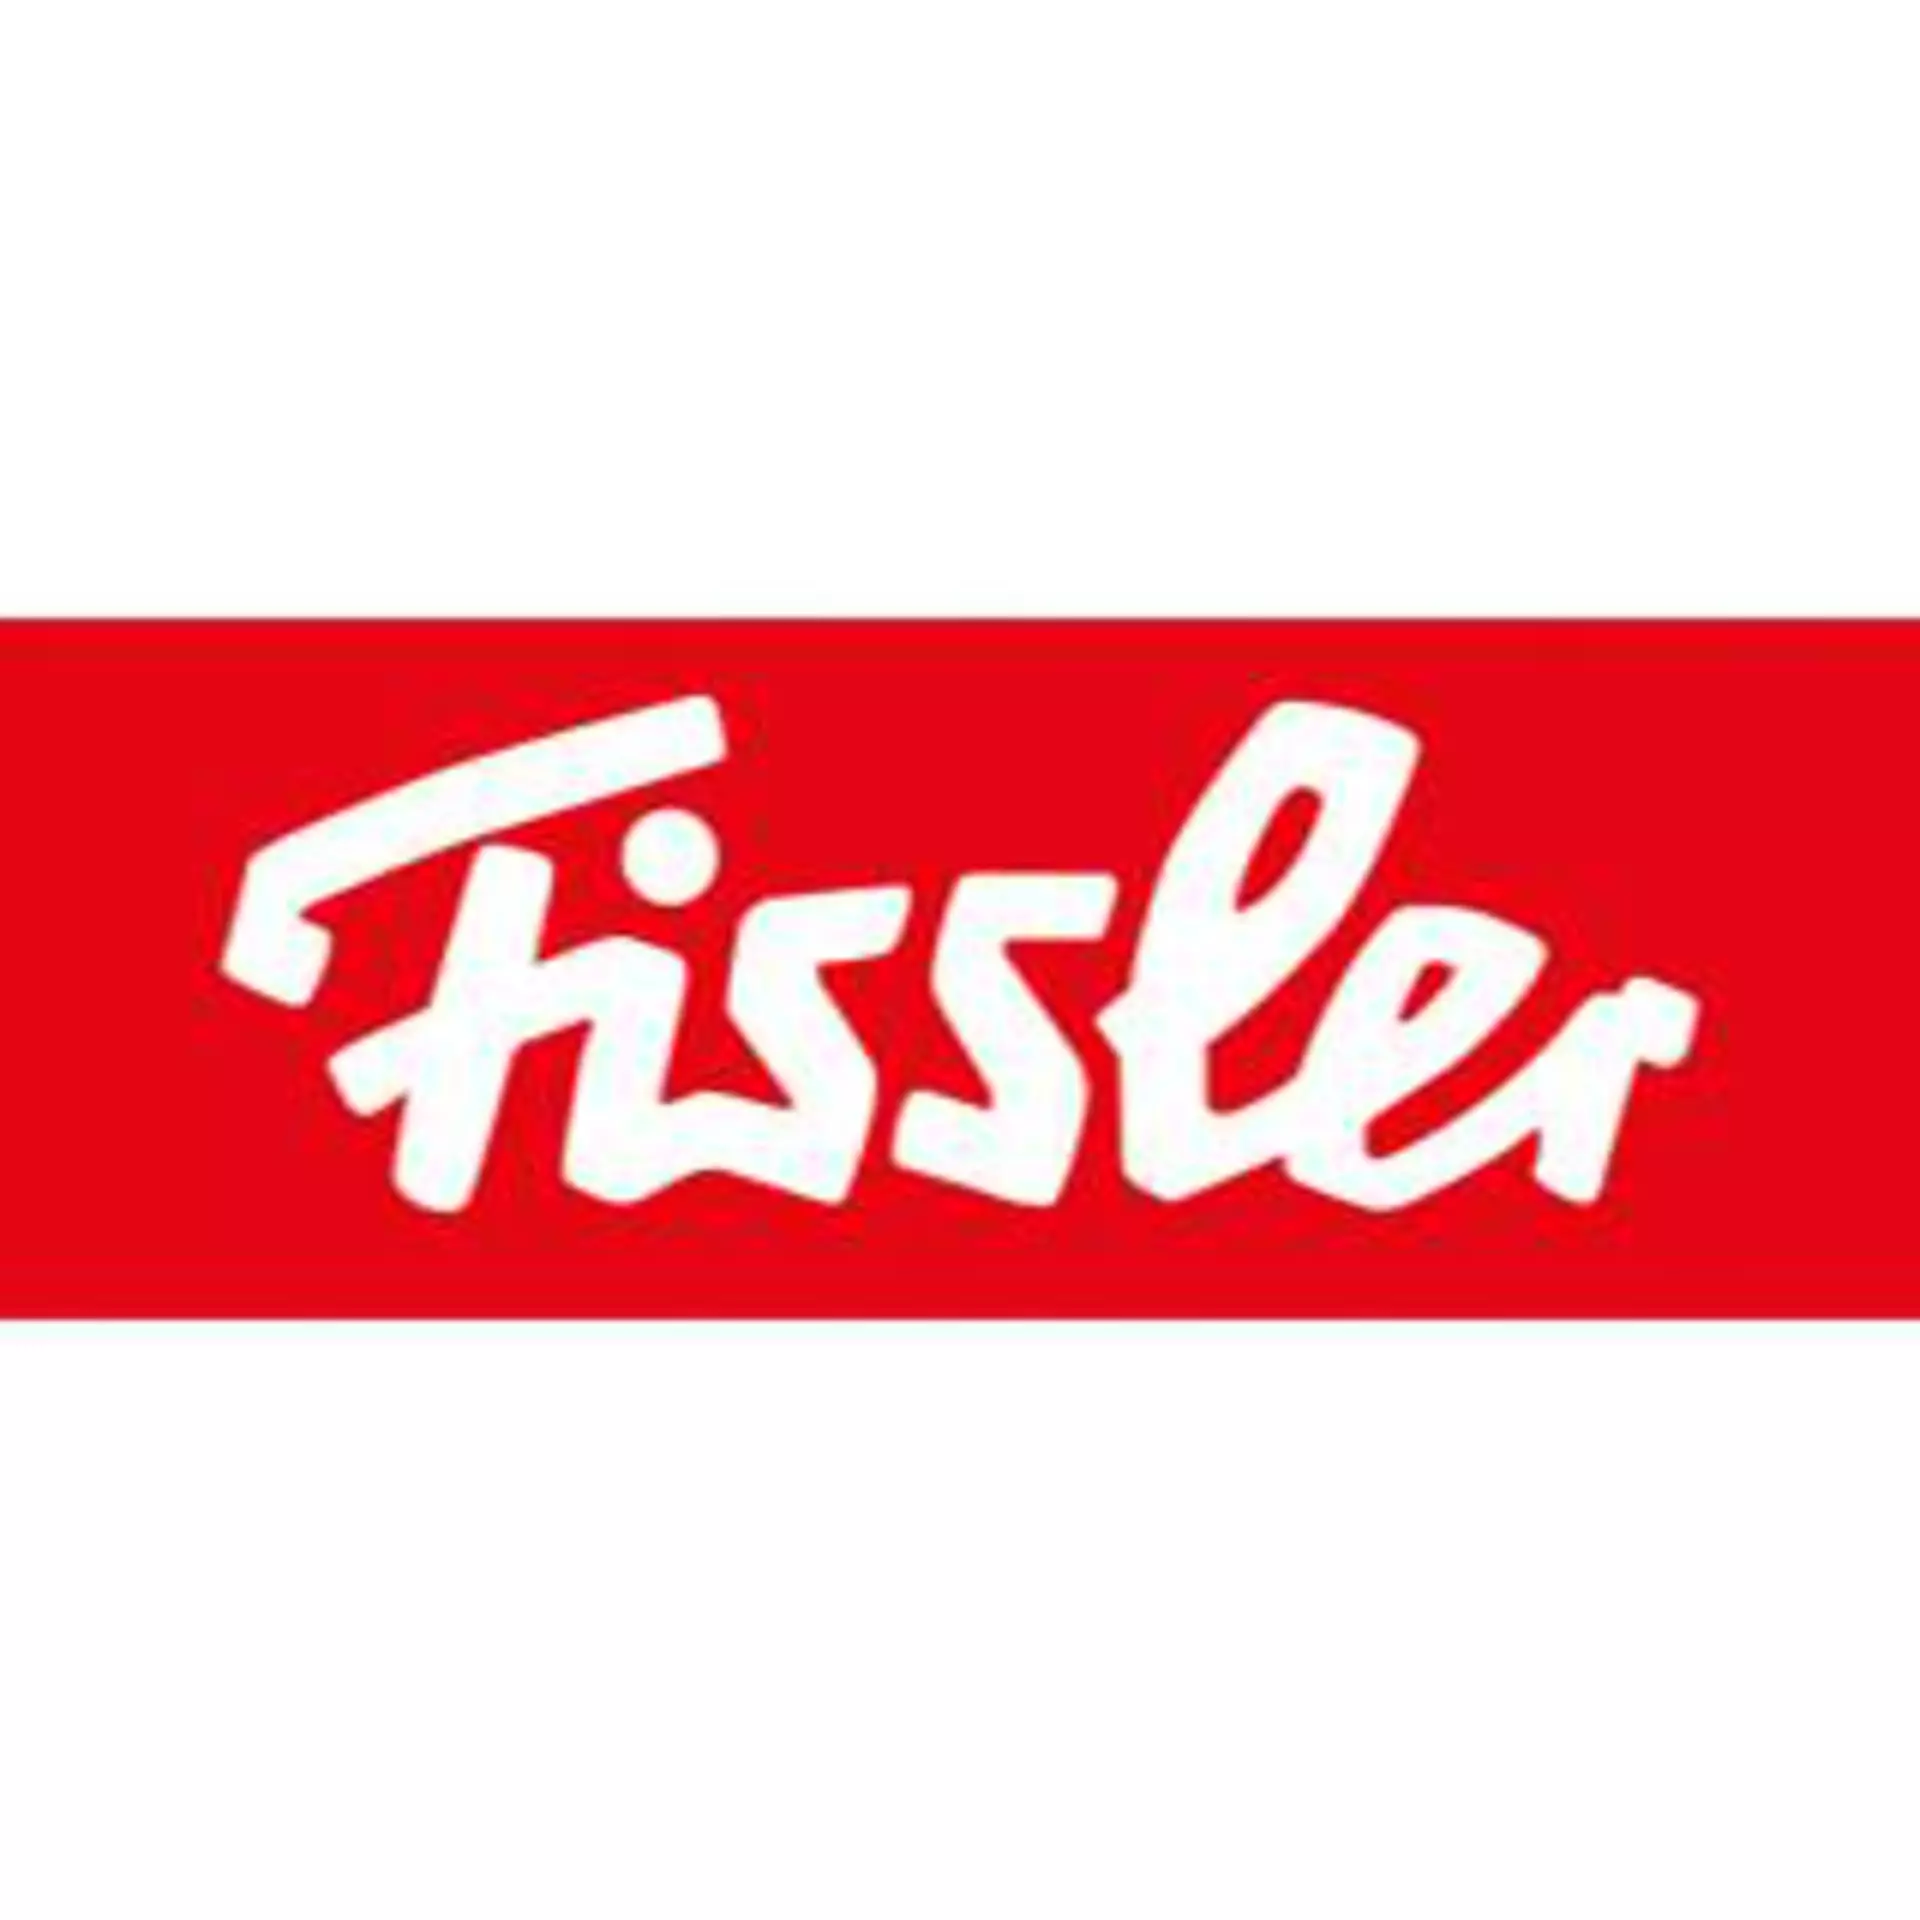 Logo Fissler